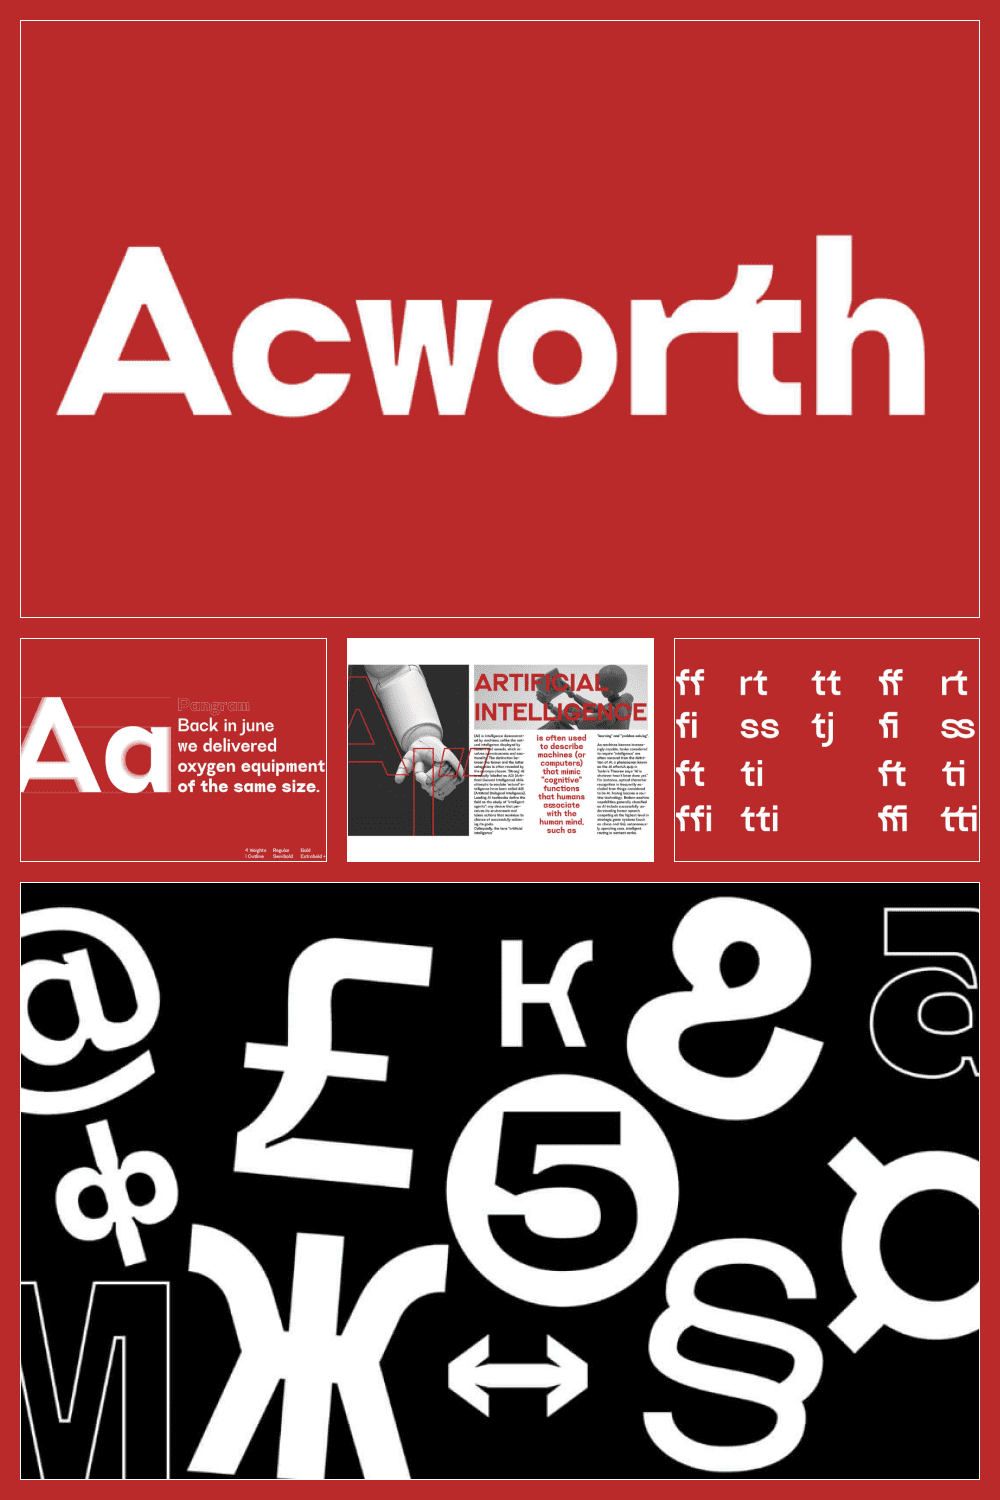 Acworth Sans Serif Font.